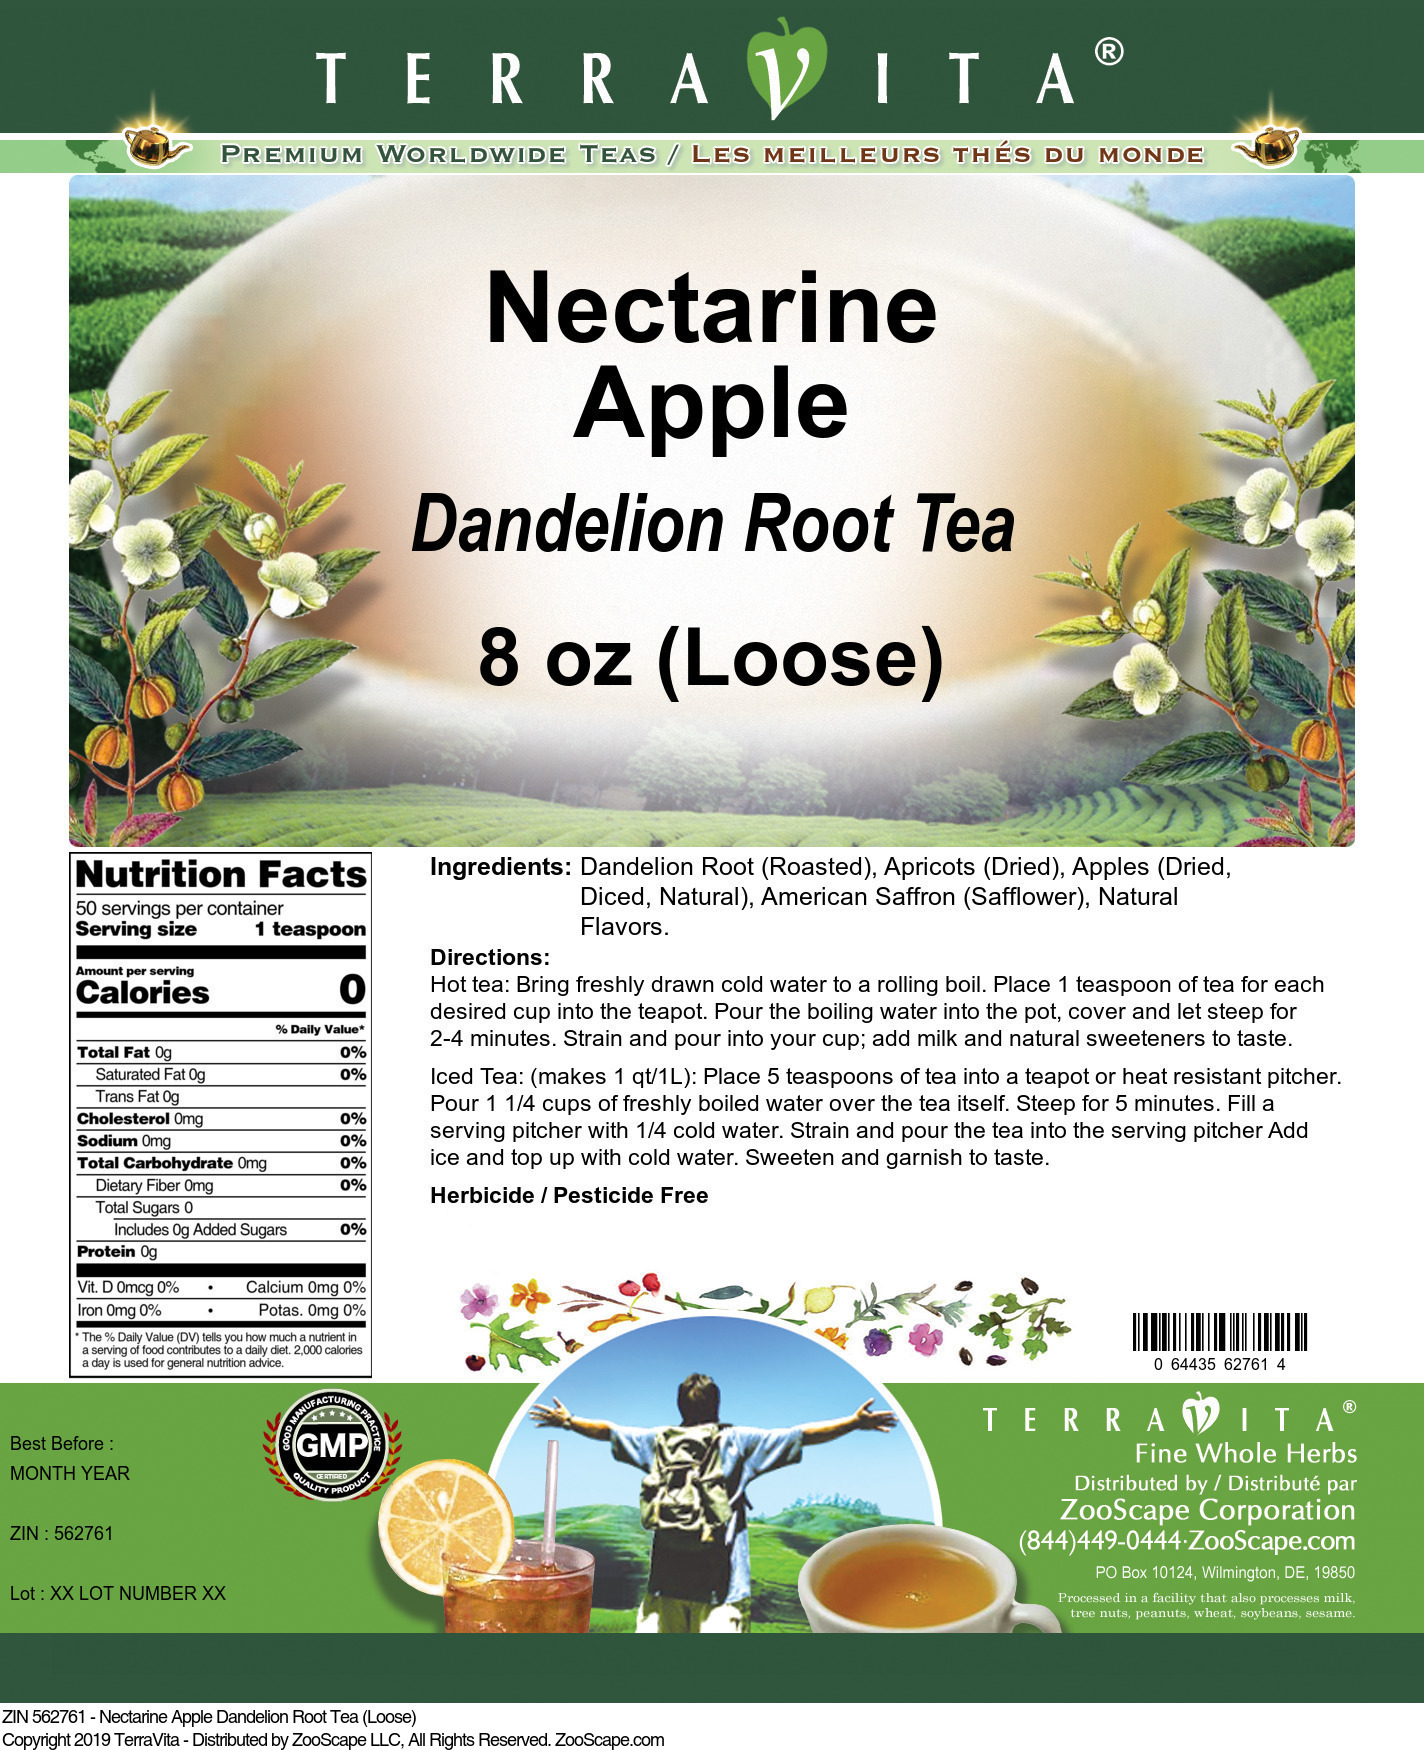 Nectarine Apple Dandelion Root Tea (Loose) - Label